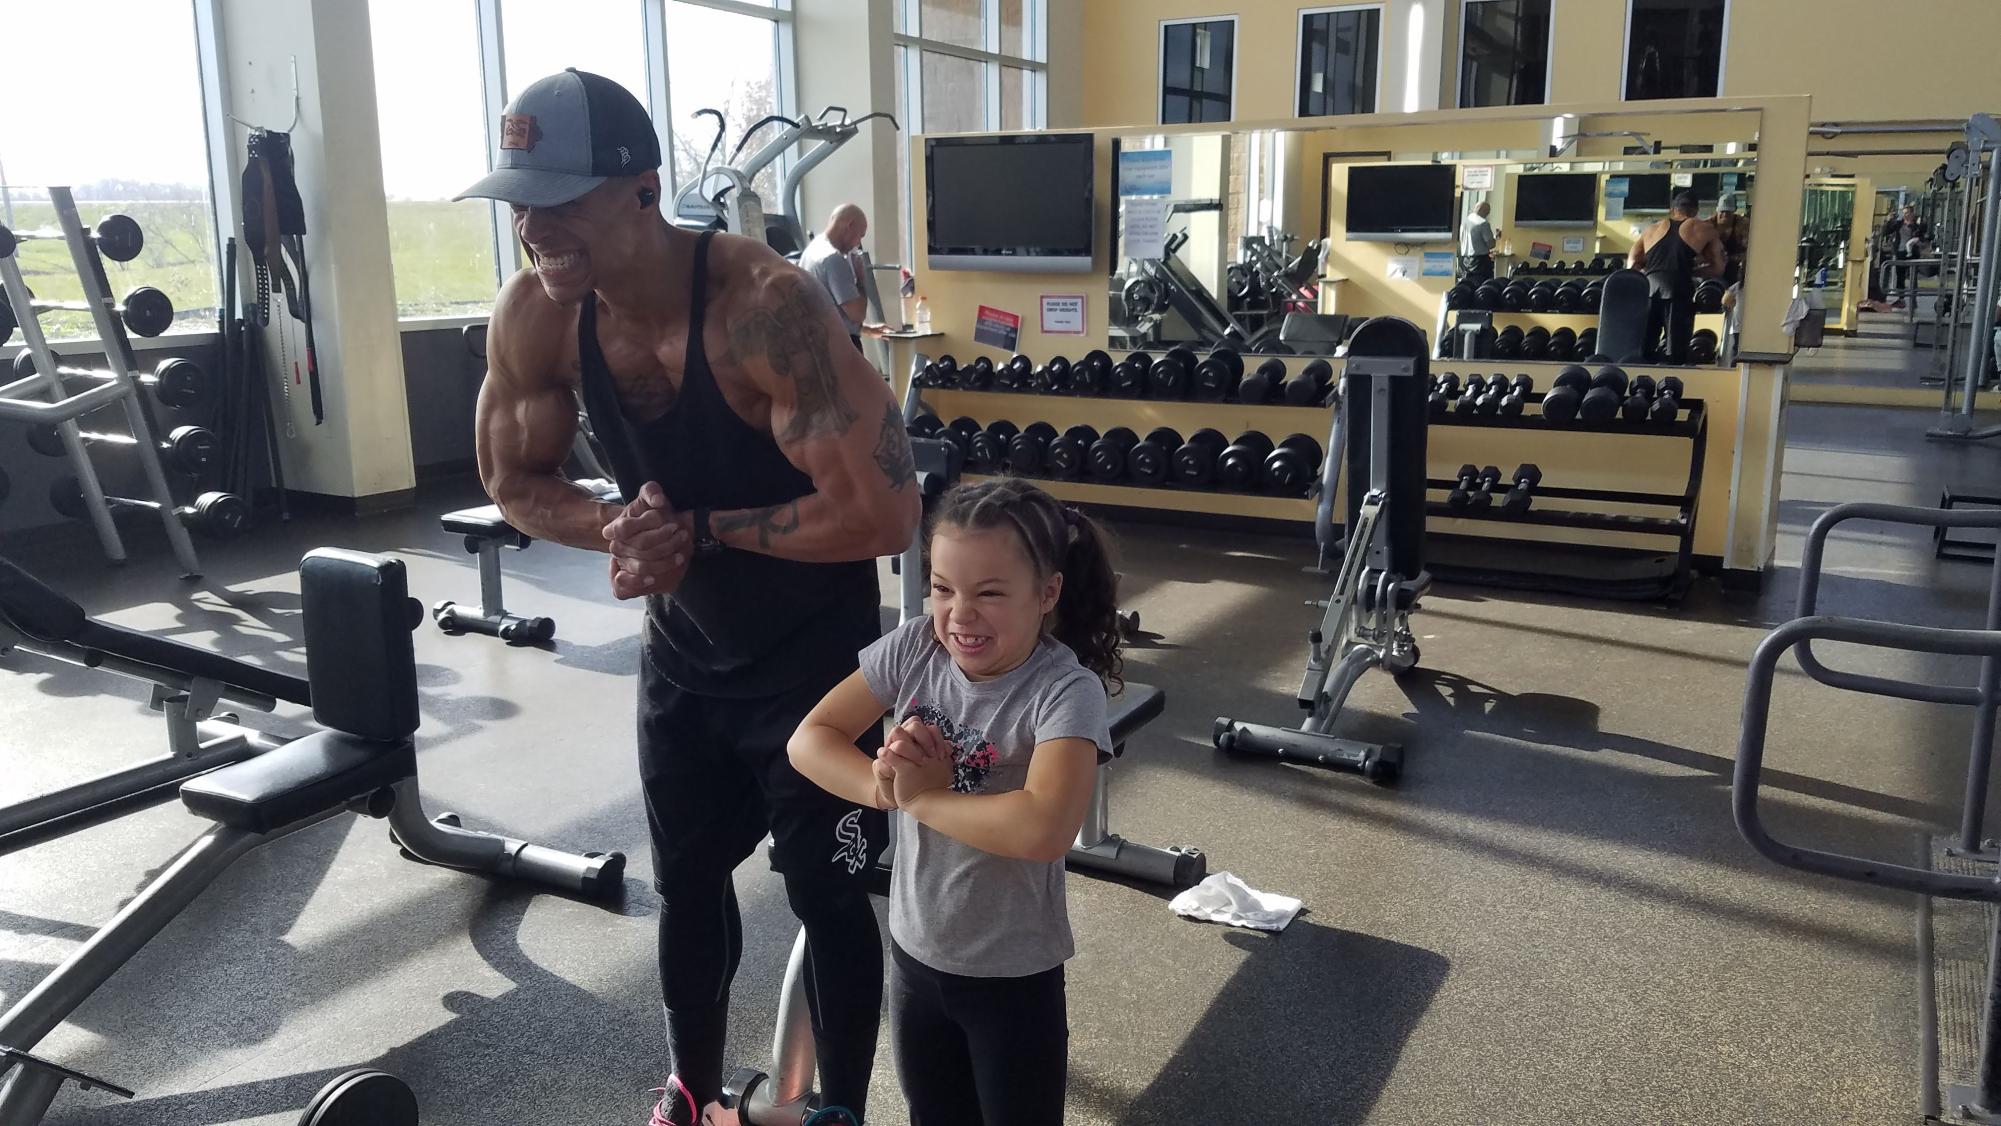 Amari Nasafi poses with his daughter after training